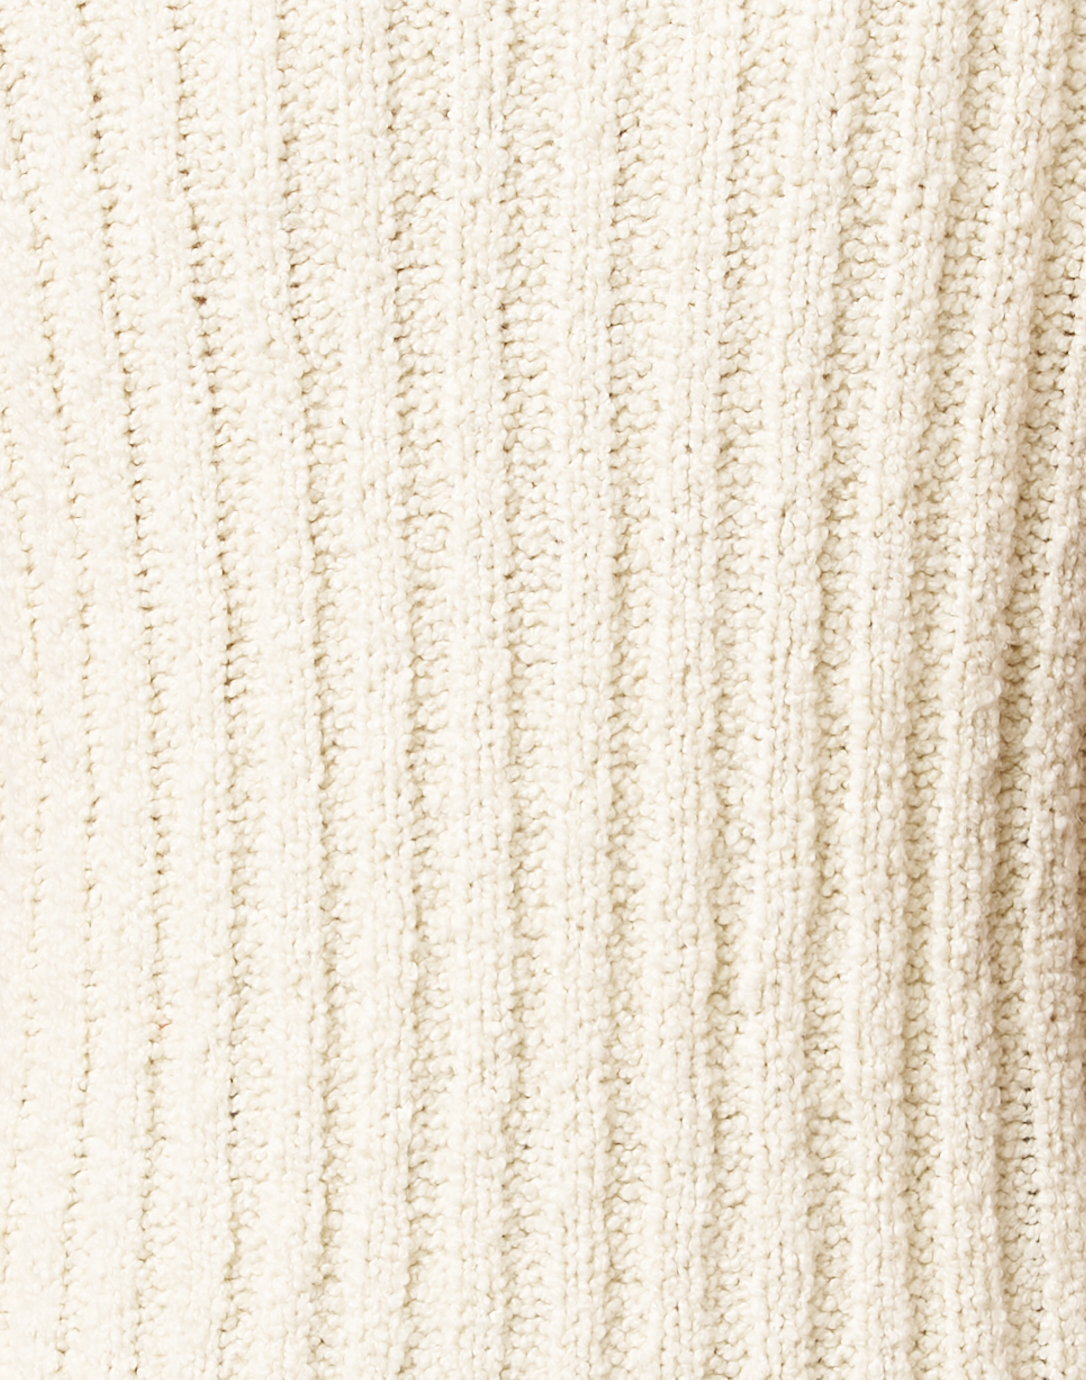 Cream Sweater Rib Knit Fabric